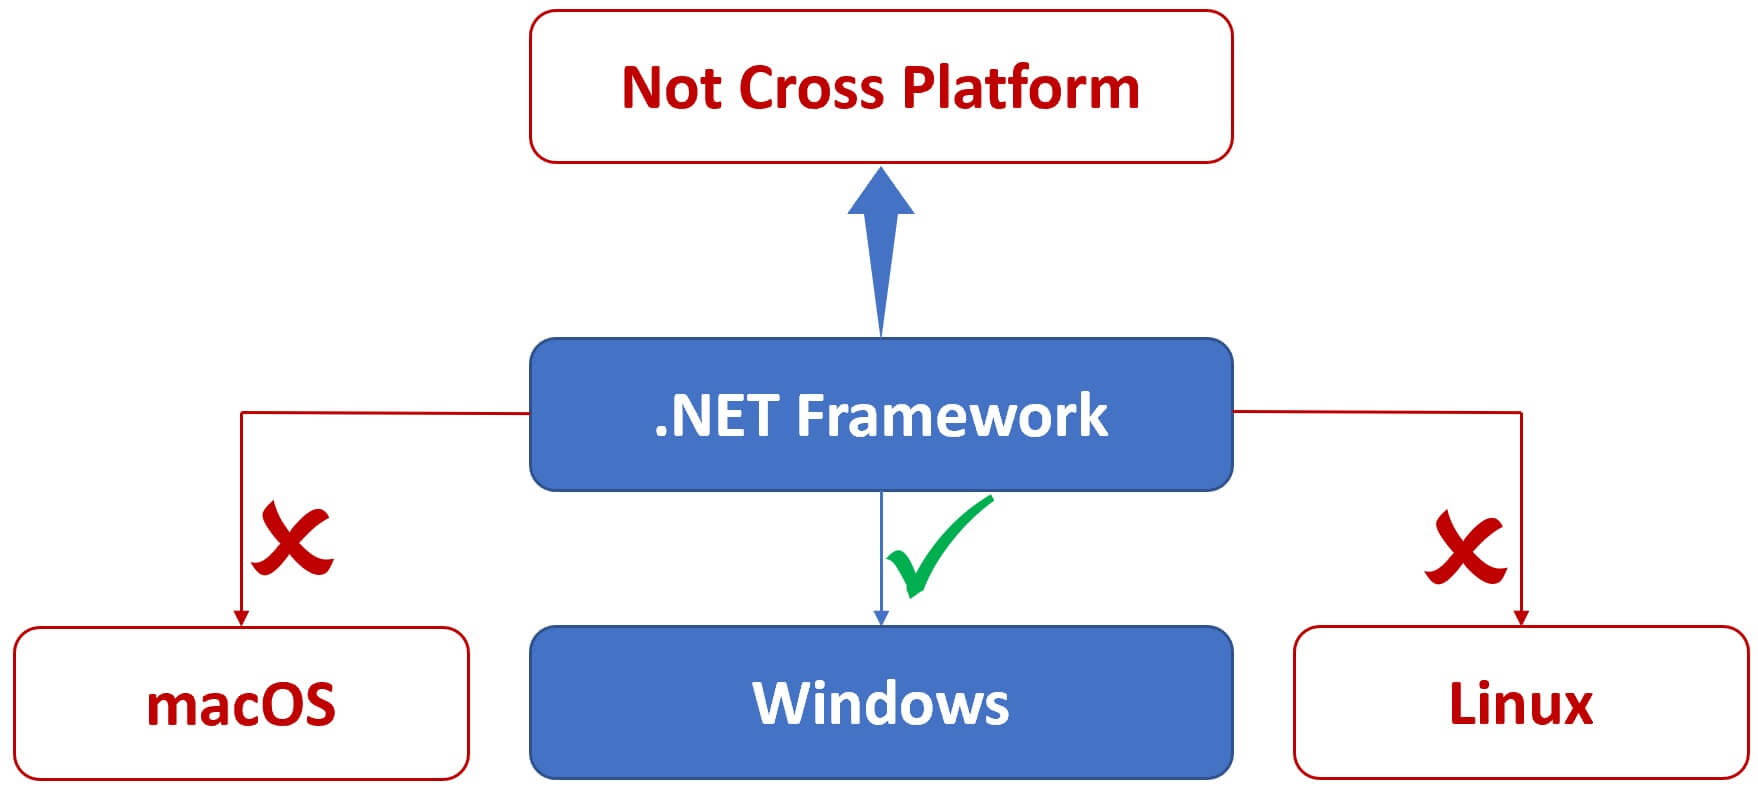 .net framework vs .net core